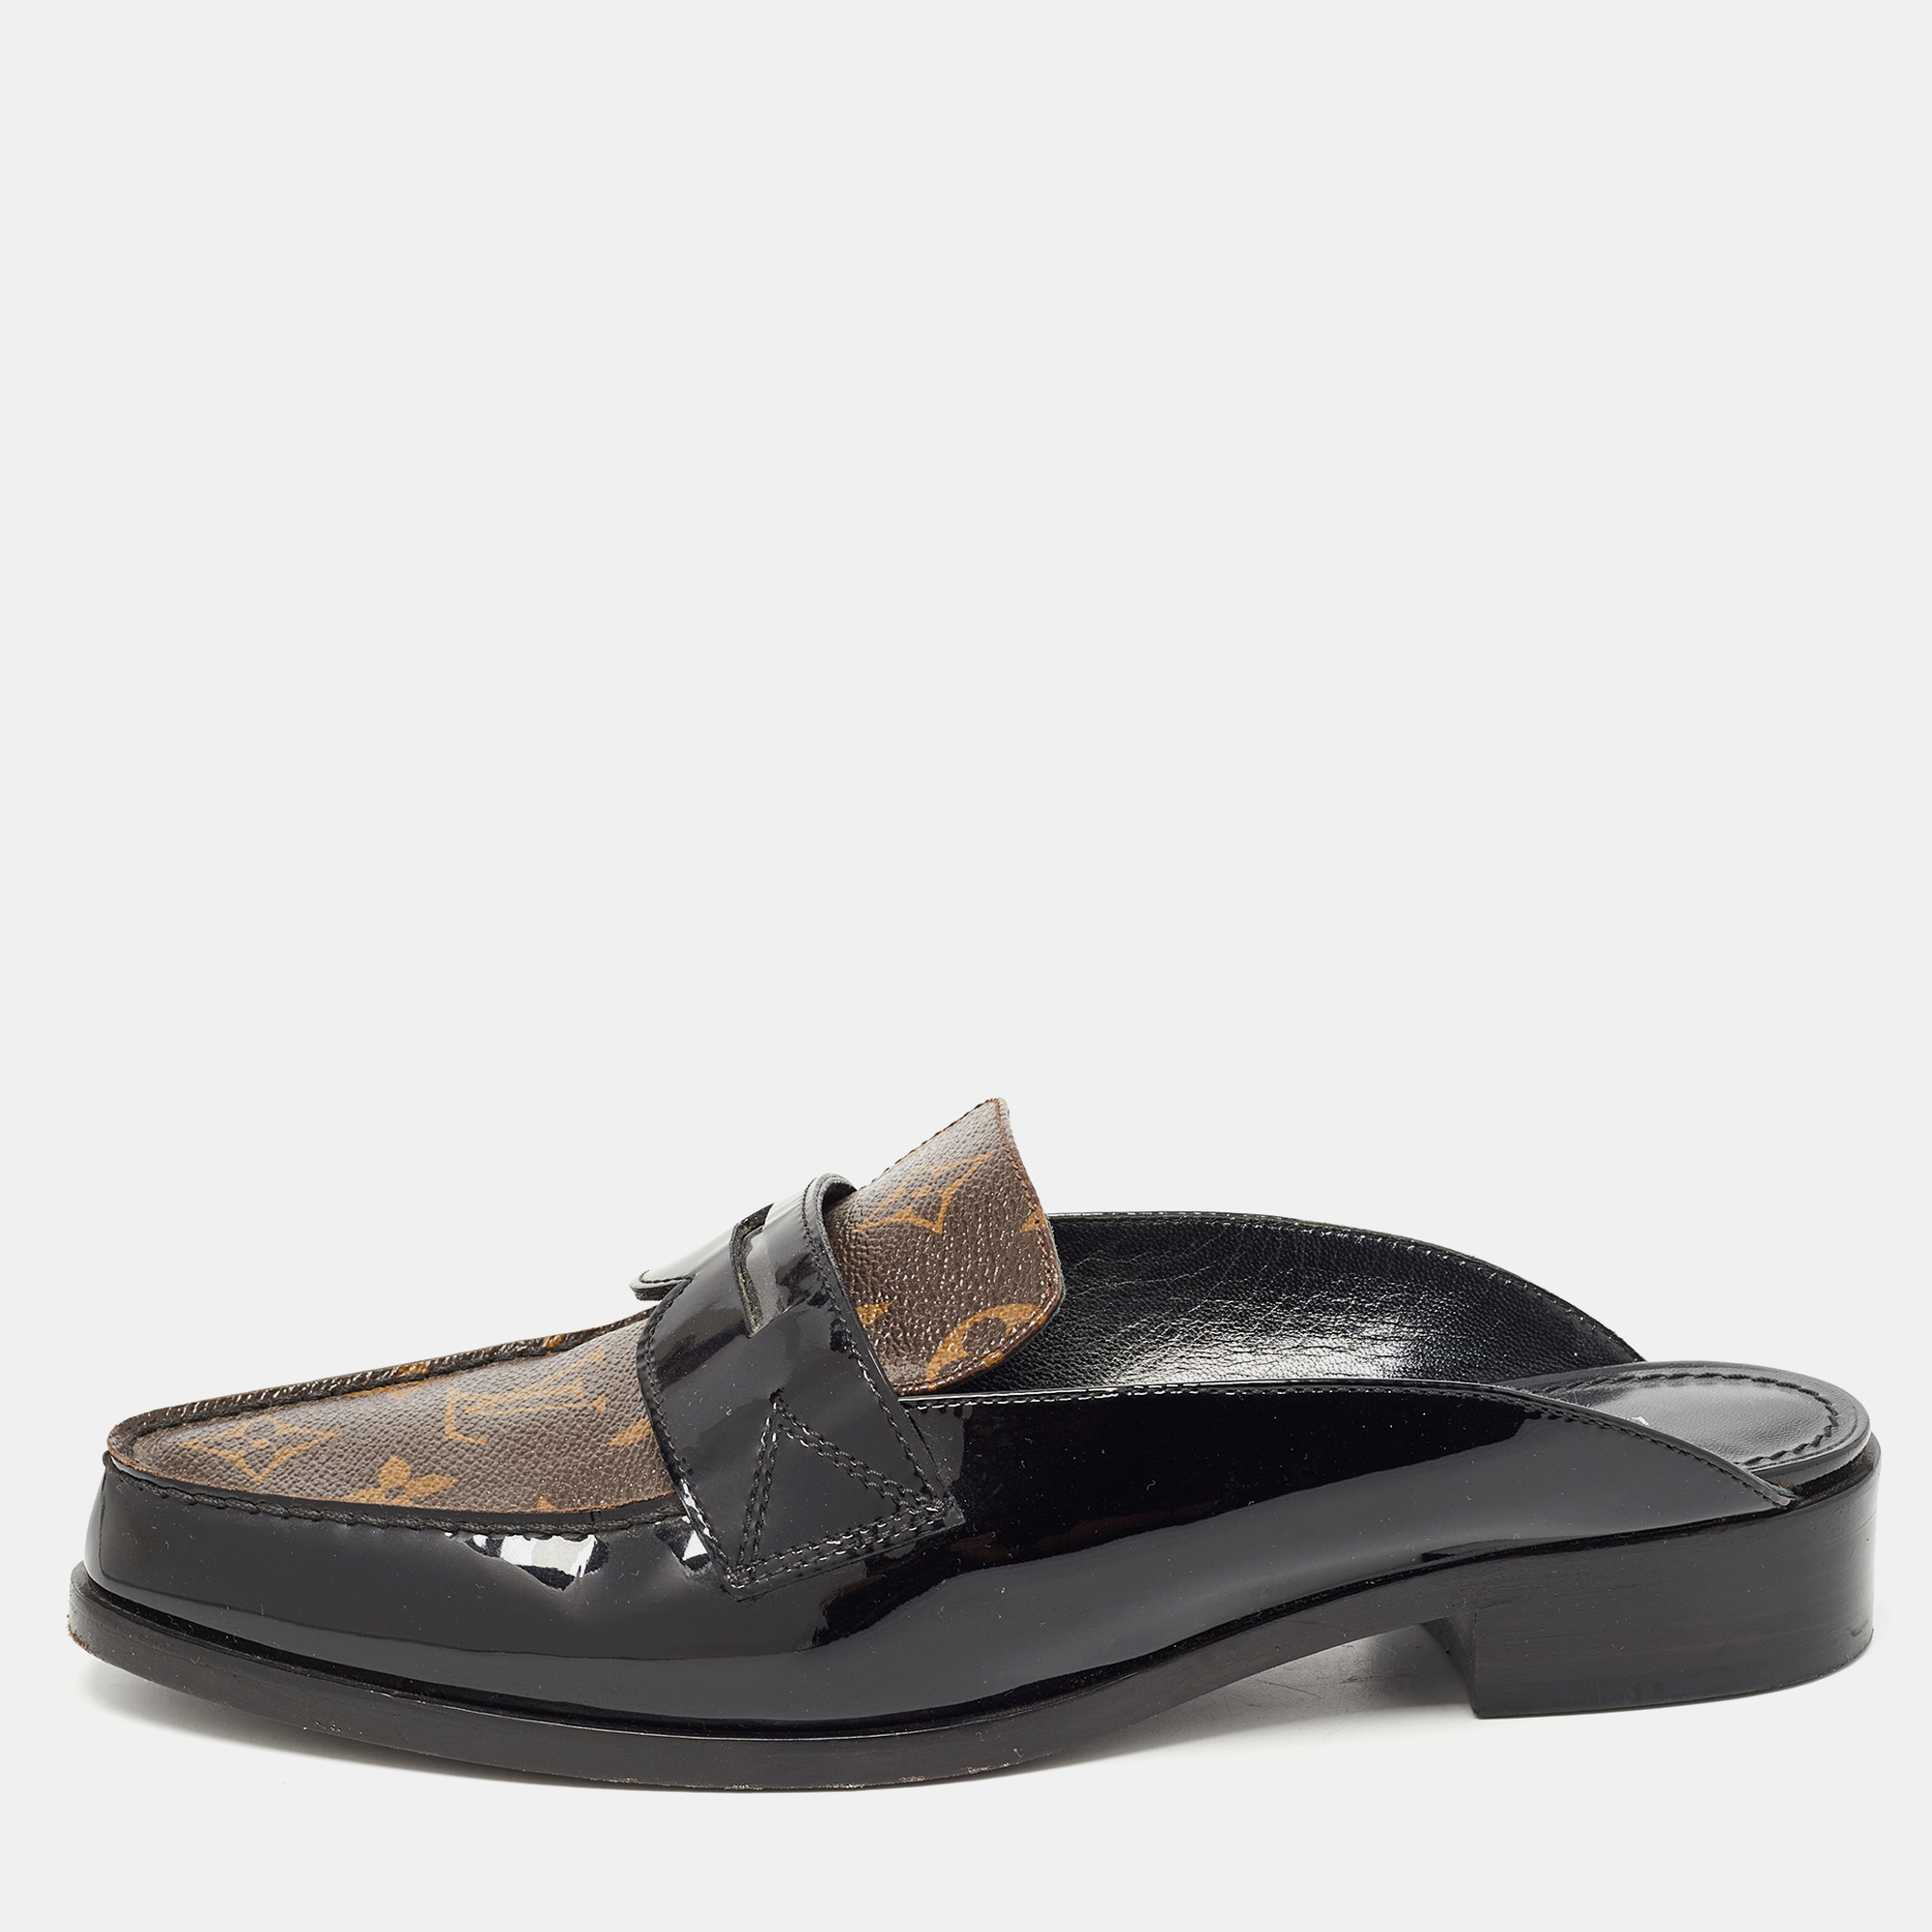 LOUIS VUITTON LV Monogram Sandals Mules size 38.5 Brown Leather